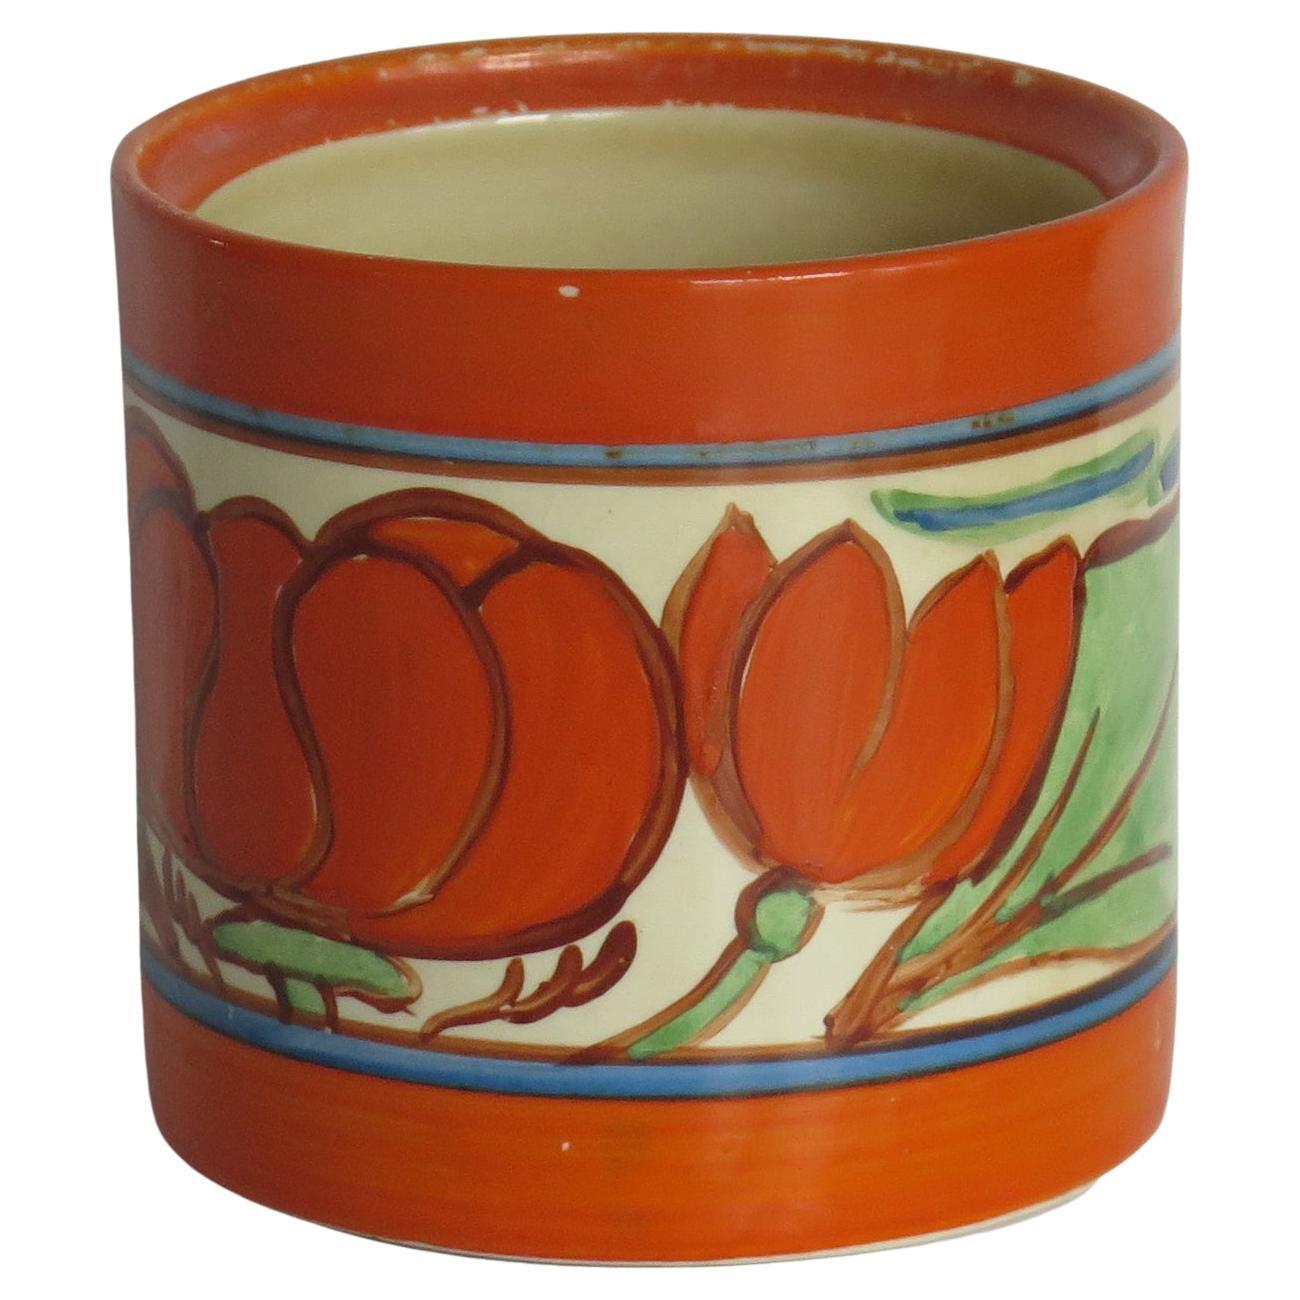 Clarice Cliff Pot in Lilien-Orange mit Fantasque-Muster, Art-déco-Periode um 1929